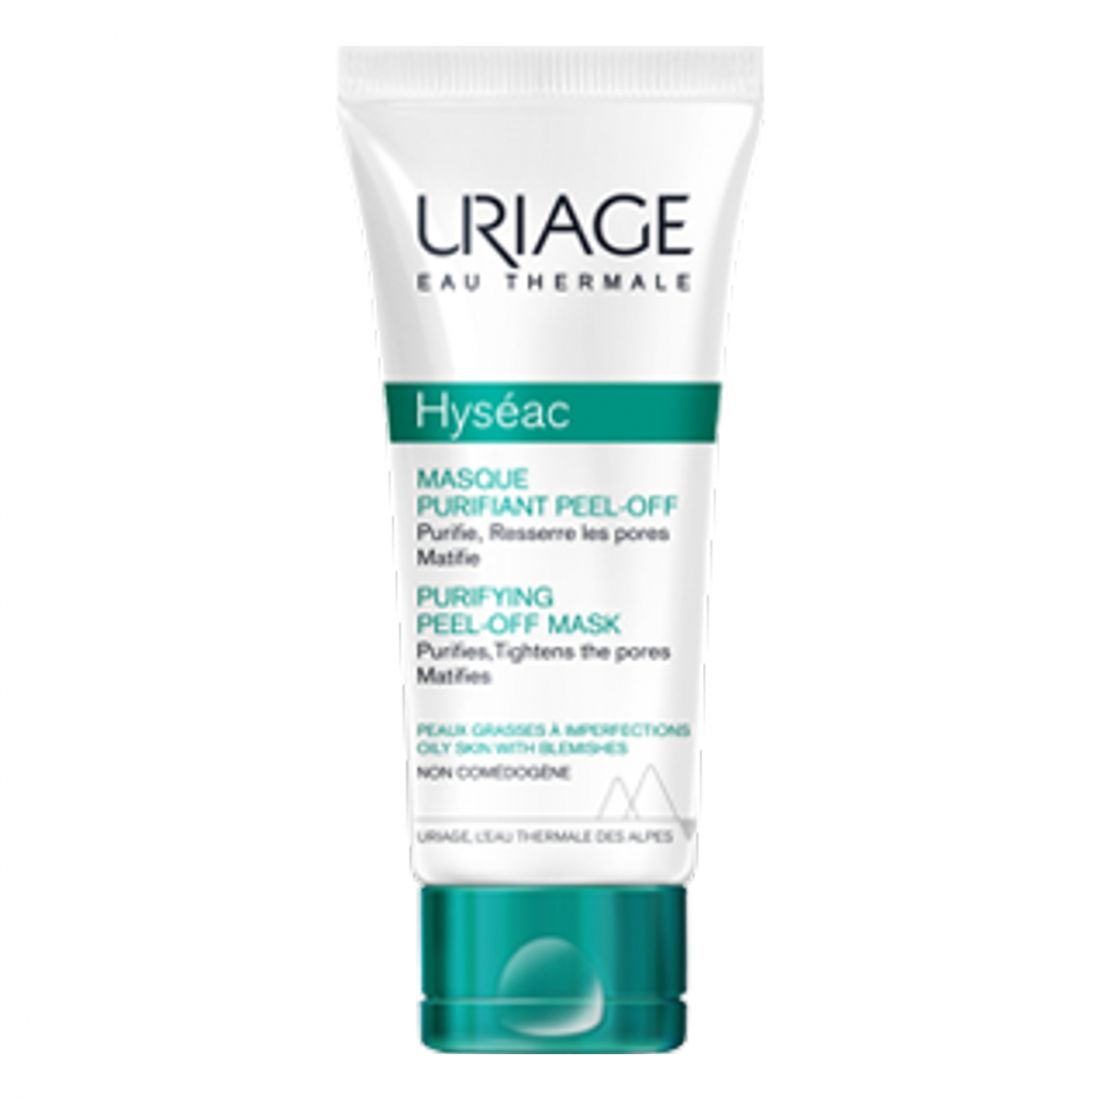 Uriage - Masque Peel-off 'Hyséac Purifying' - 50 ml